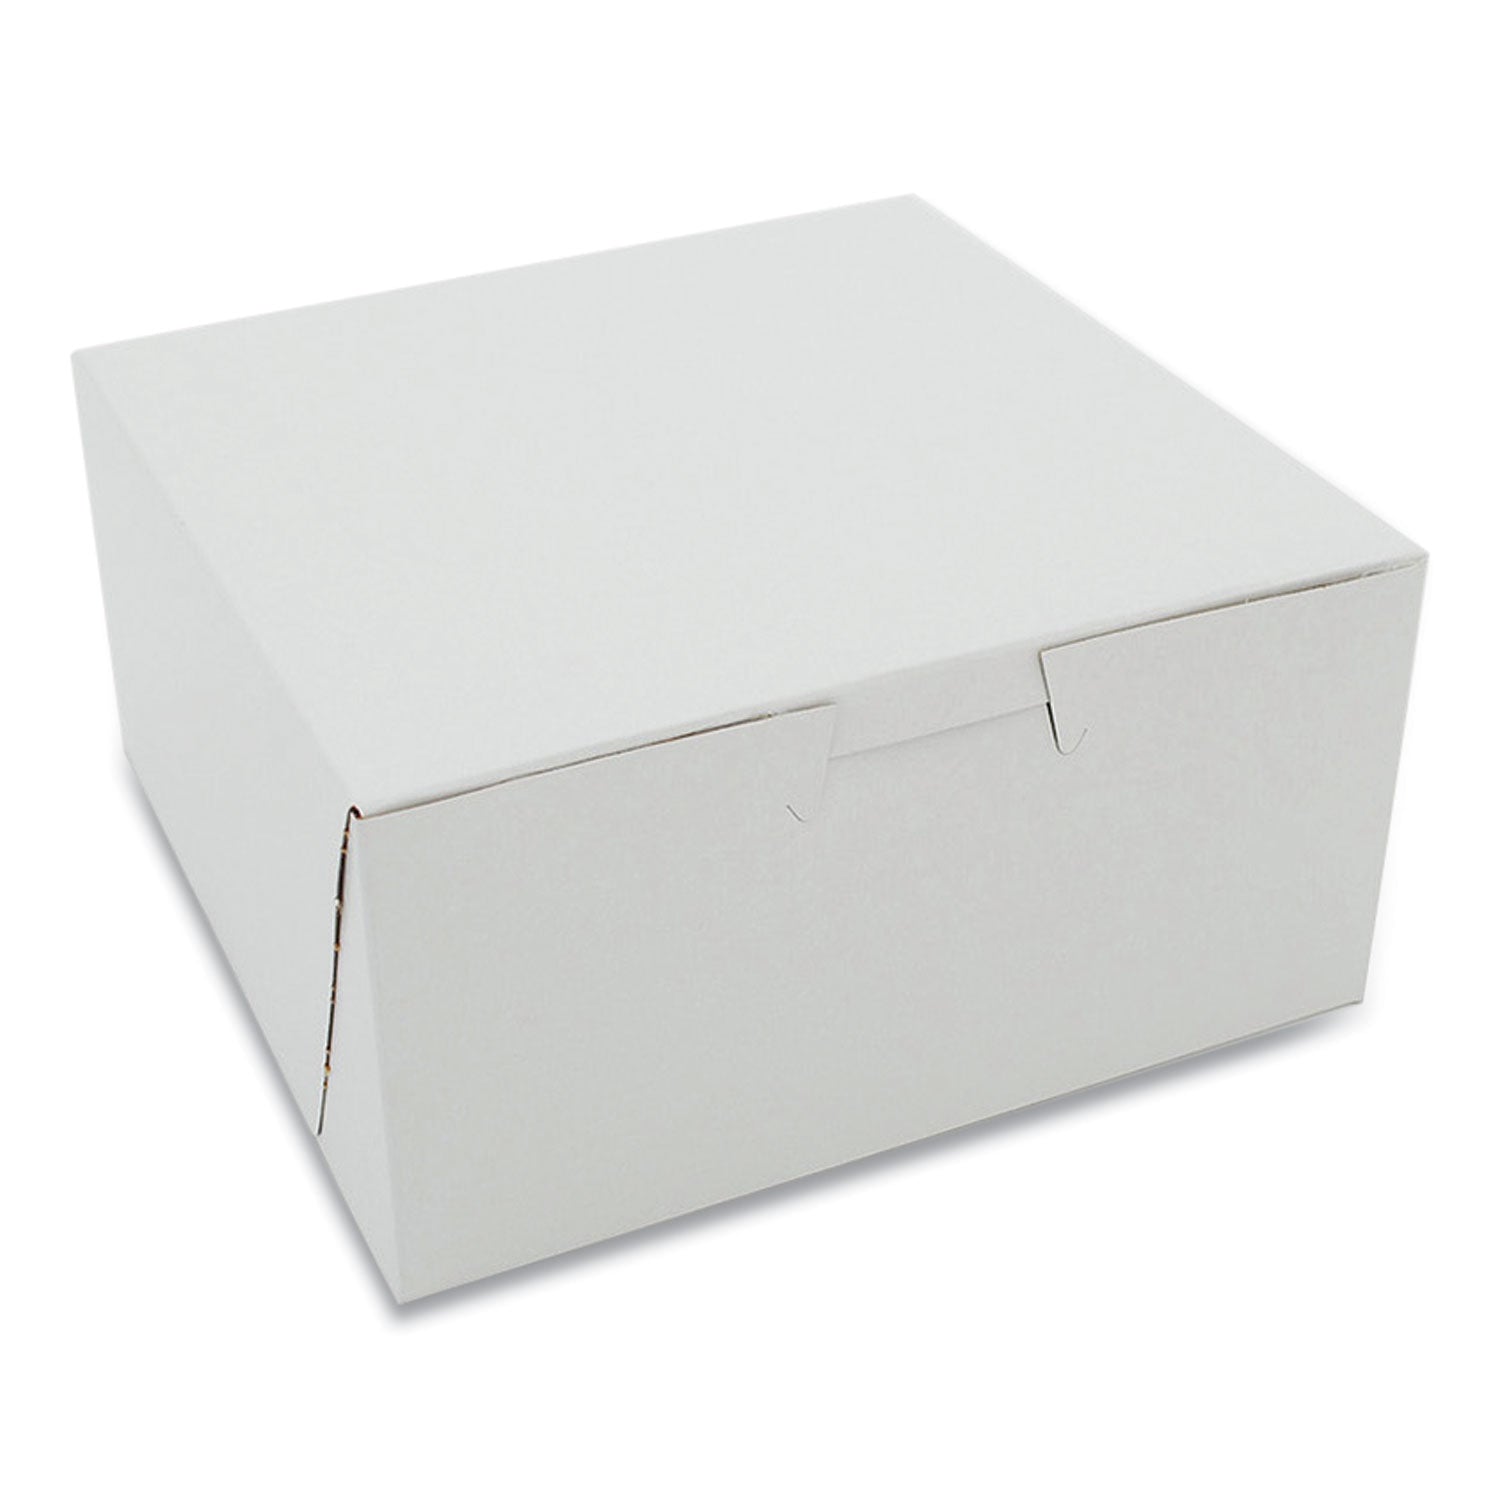 white-one-piece-non-window-bakery-boxes-standard-3-x-6-x-6-white-paper-250-carton_sch1505 - 1